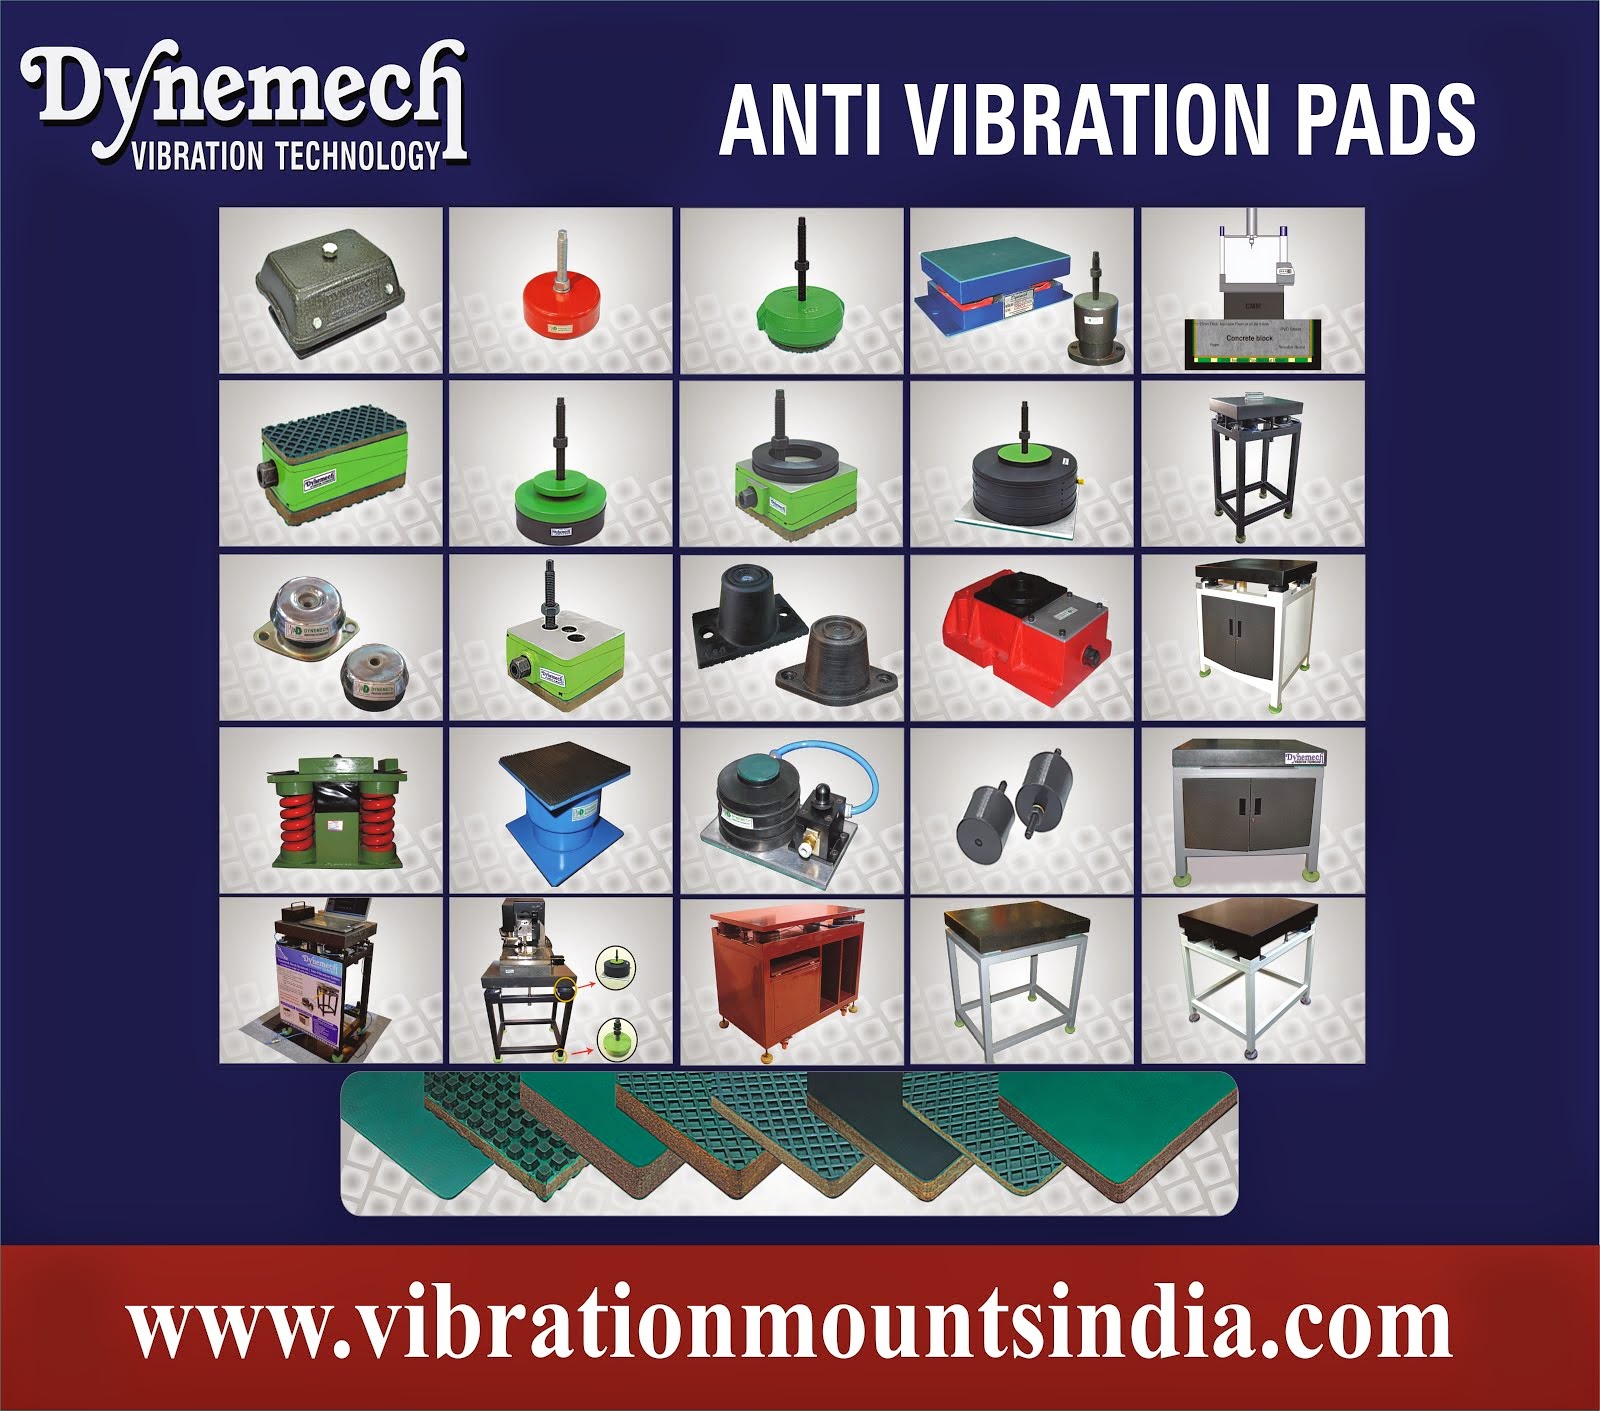 Dynemech Vibration Mount